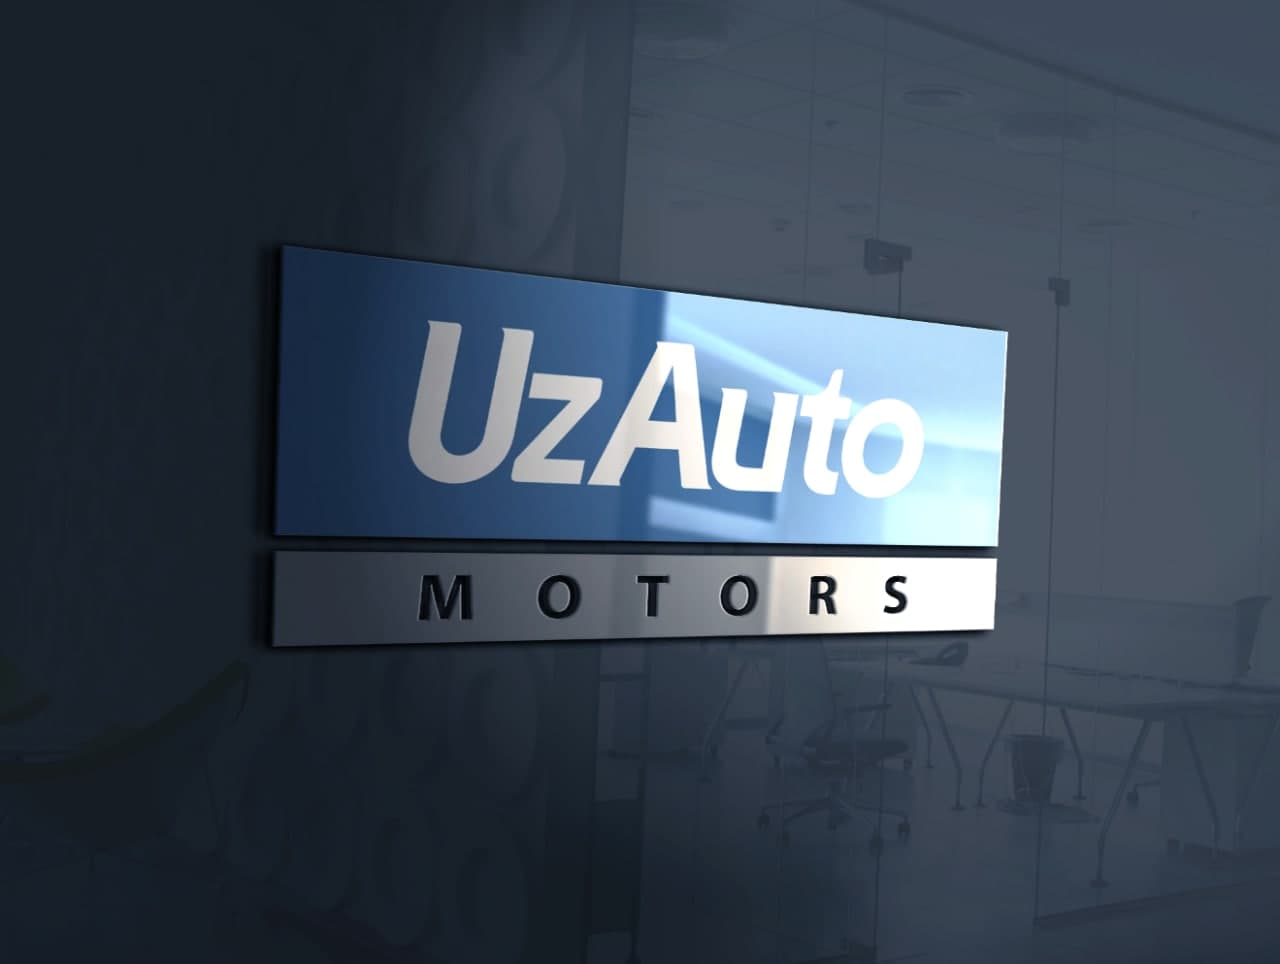 kun.uz - “Ўзавтосаноат”га собиқ раҳбарнинг қайтарилиши UzAuto Motors акцияларини янада арзонлаштирди.